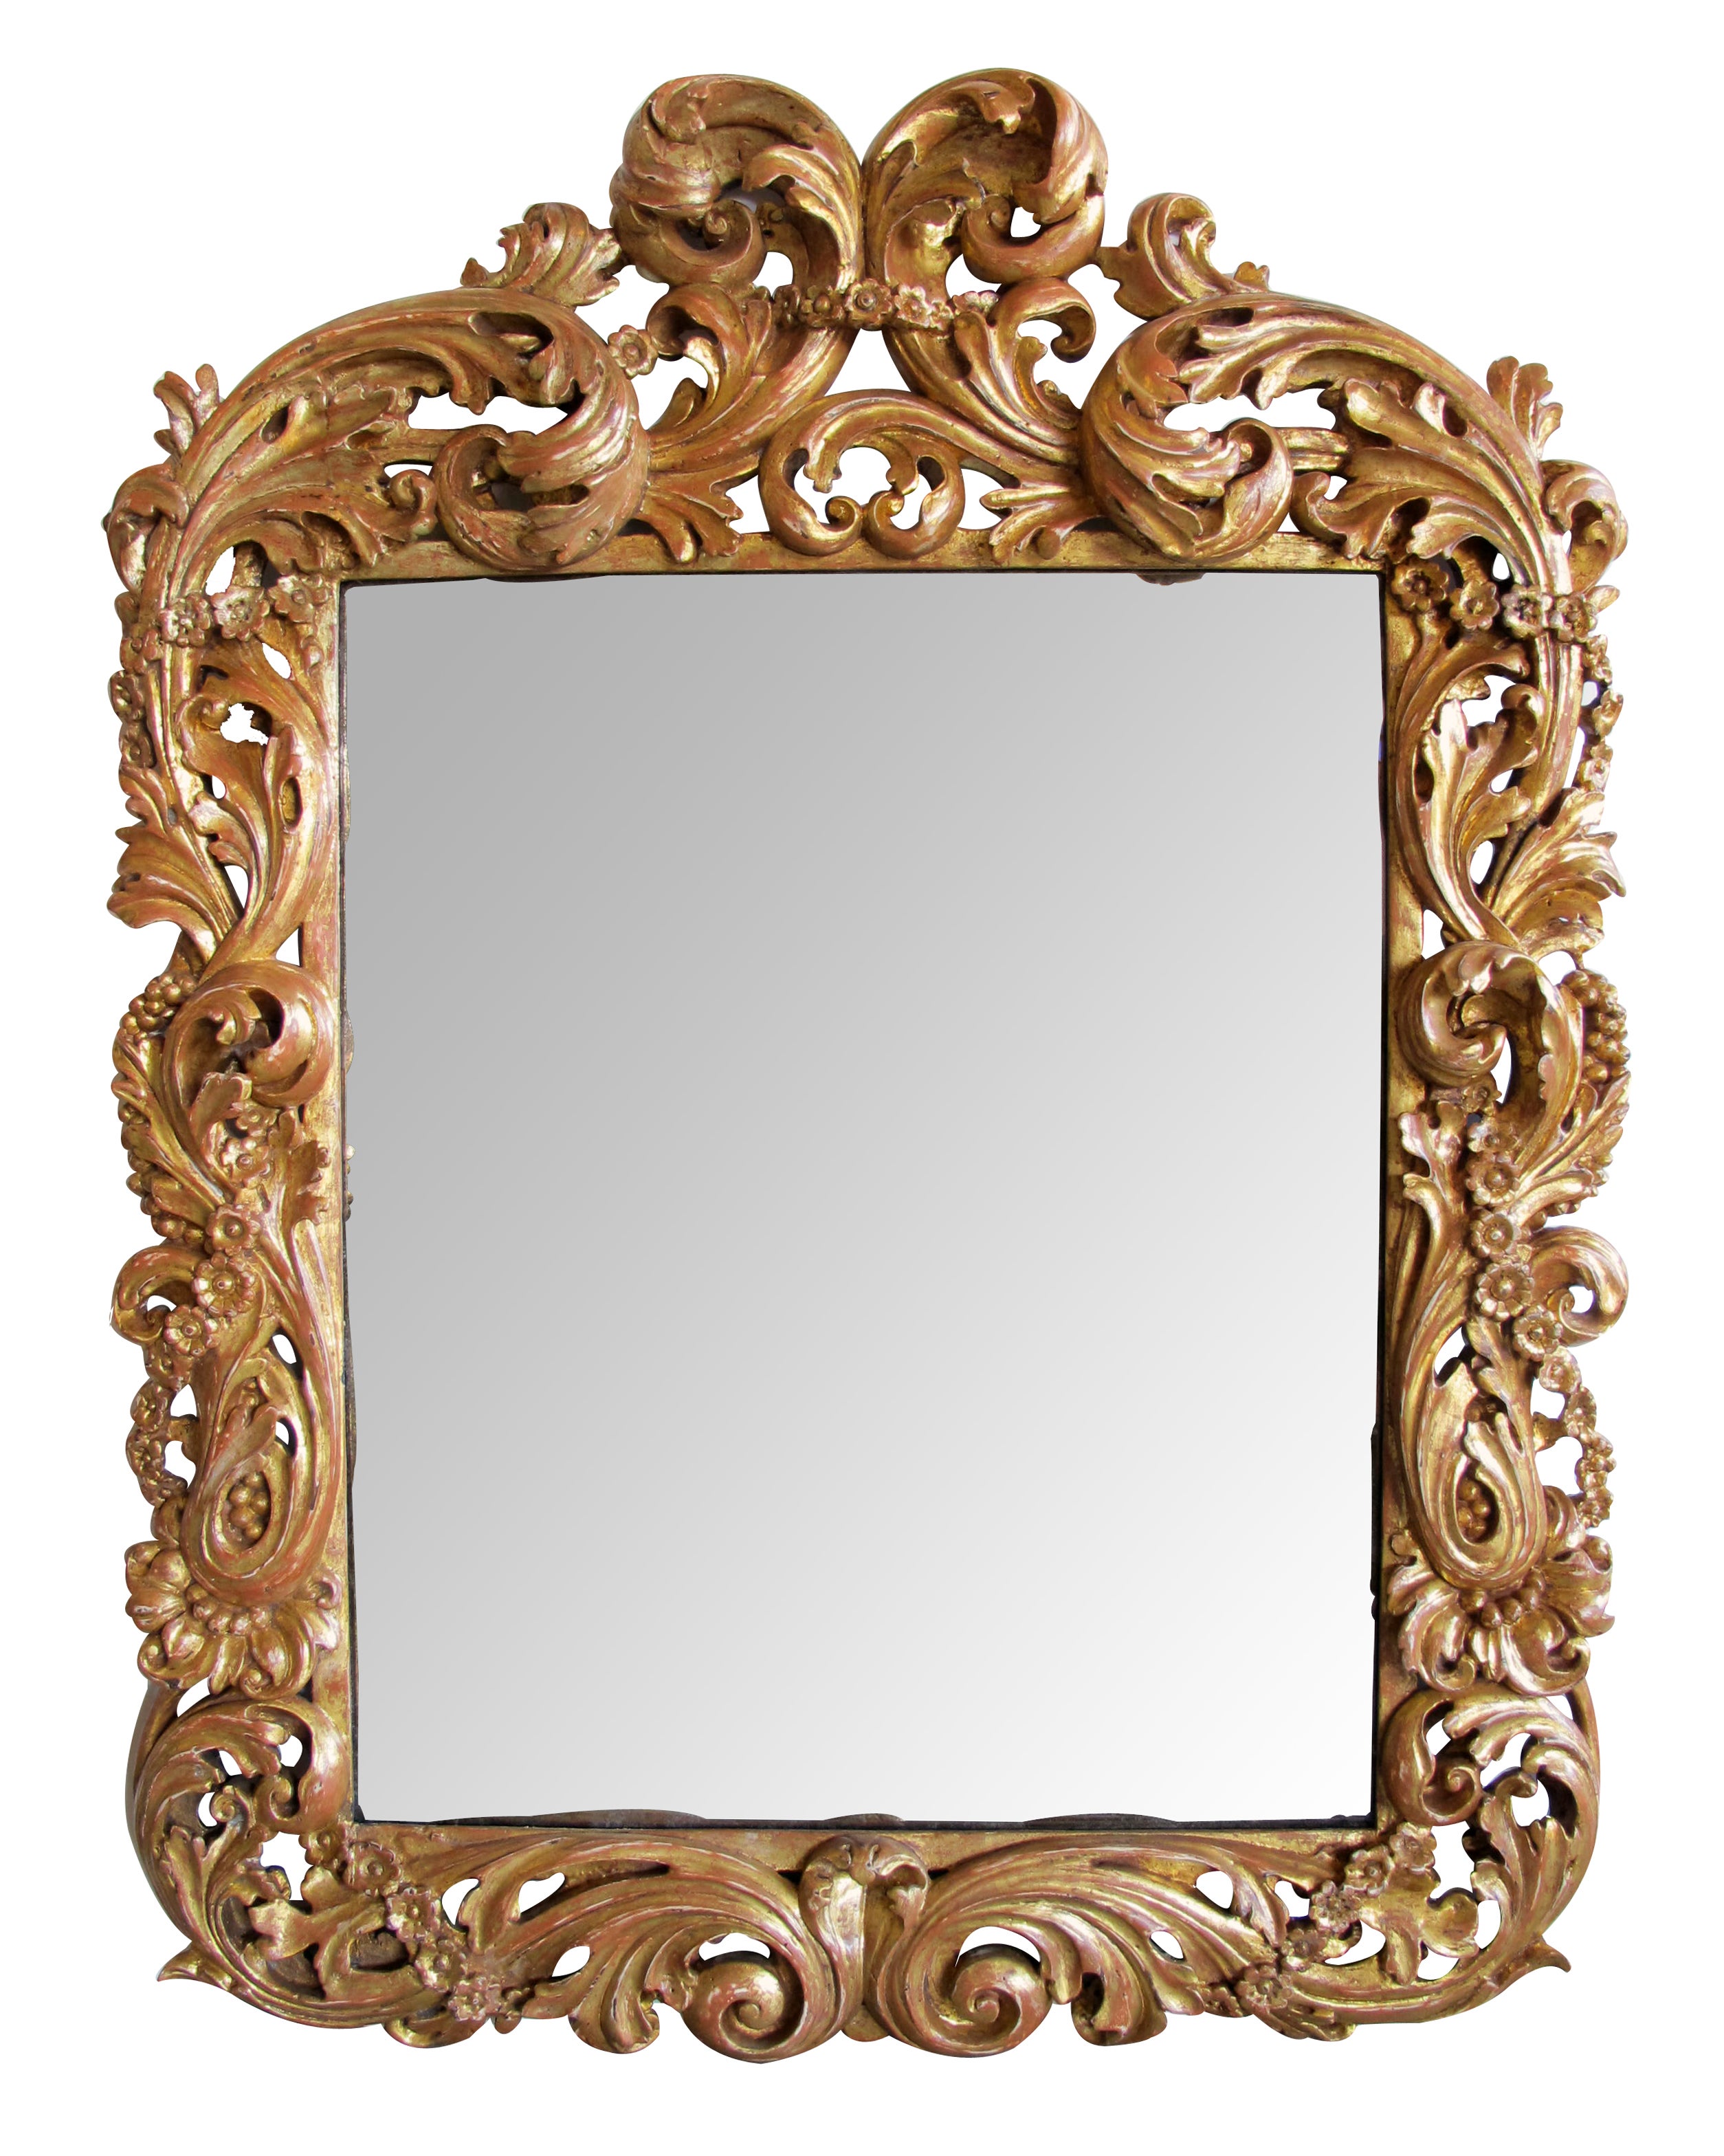 A Good Quality Carved Italian Baroque Giltwood Mirror w/Floral & Foliate Design